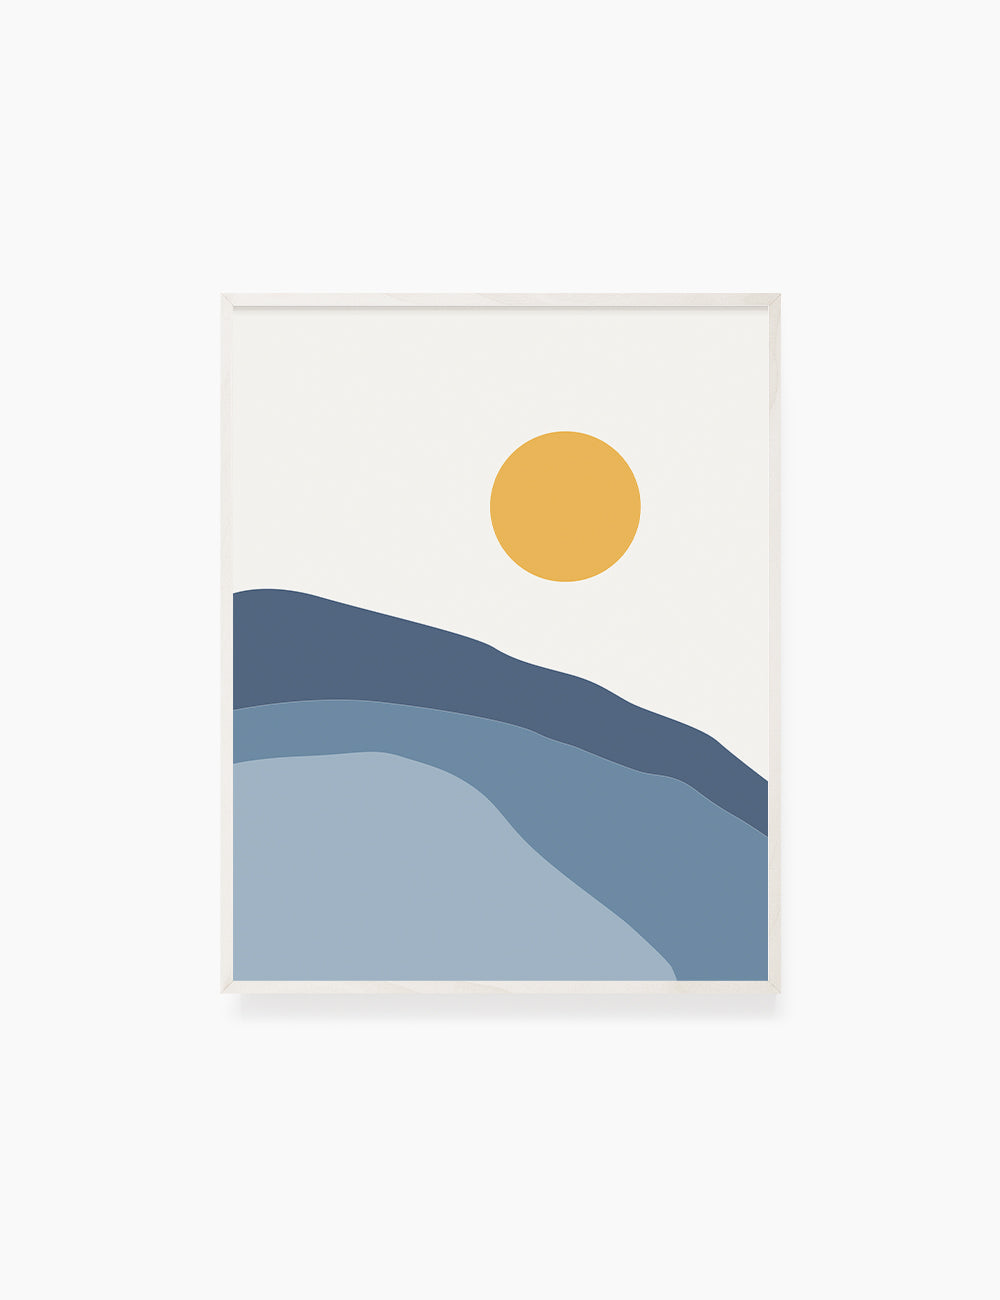 SUN OVER THE BLUE OCEAN LANDSCAPE. BOHO ART. Minimalist. Abstract. Printable Wall Art Illustration. - PAPER MOON Art & Design